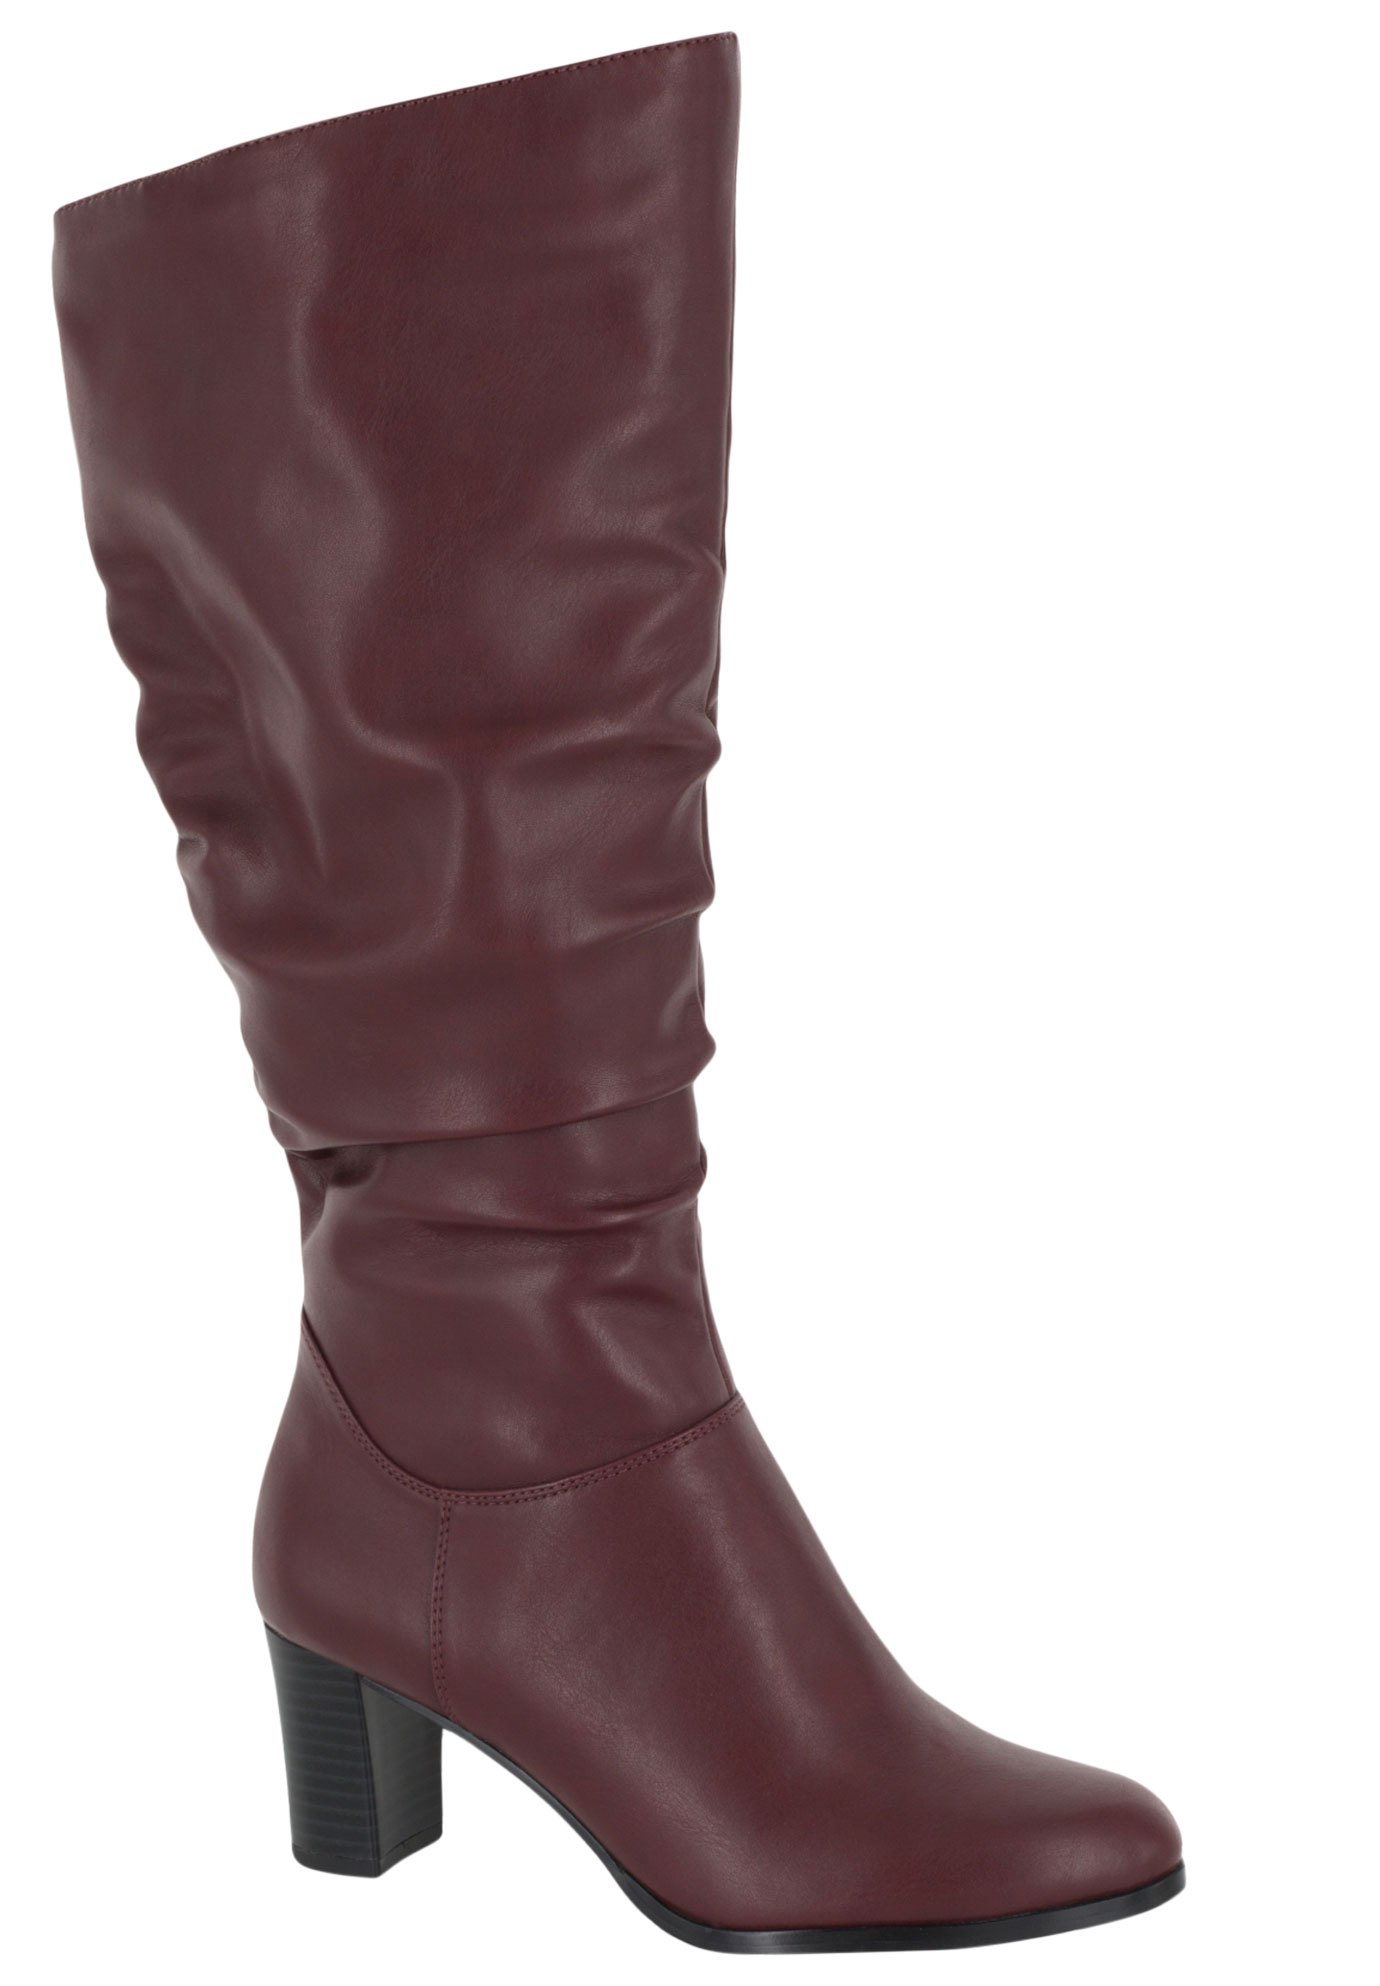 maroon wide calf boots